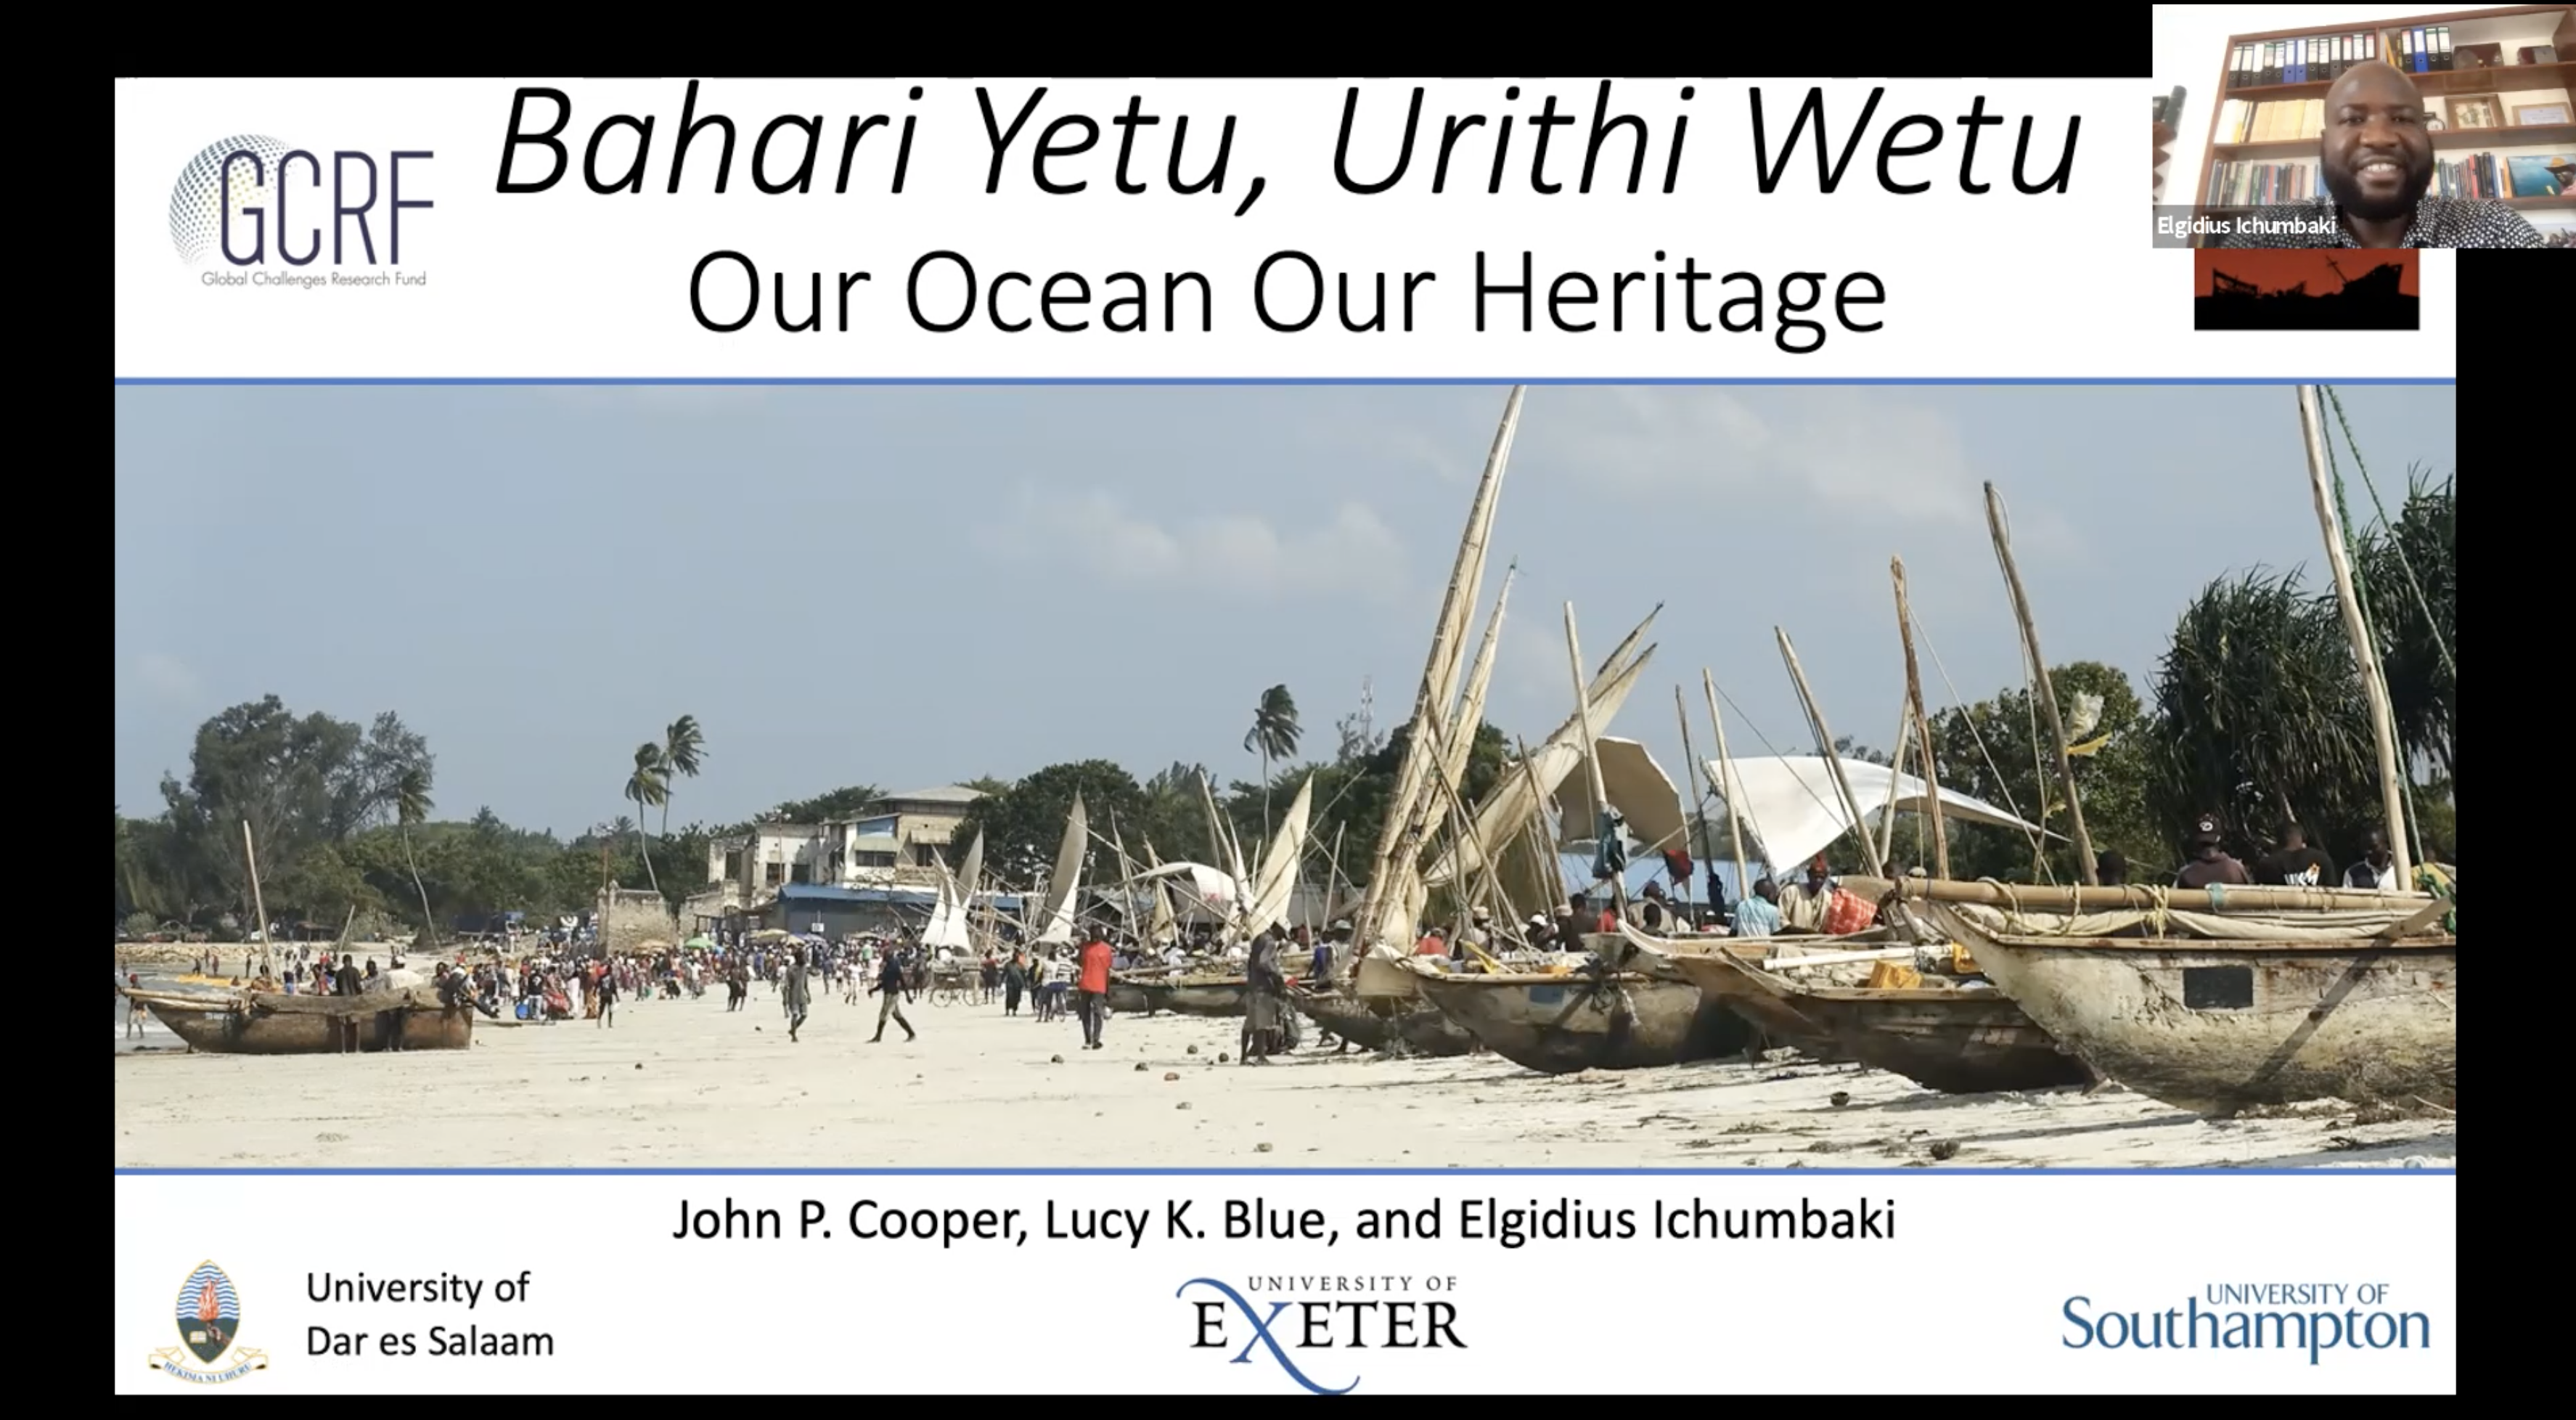 Elgidius Ichumbaki, presenting the Bahari Yetu, Urithi Wetu Project, which means: Our Ocean, Our Heritage